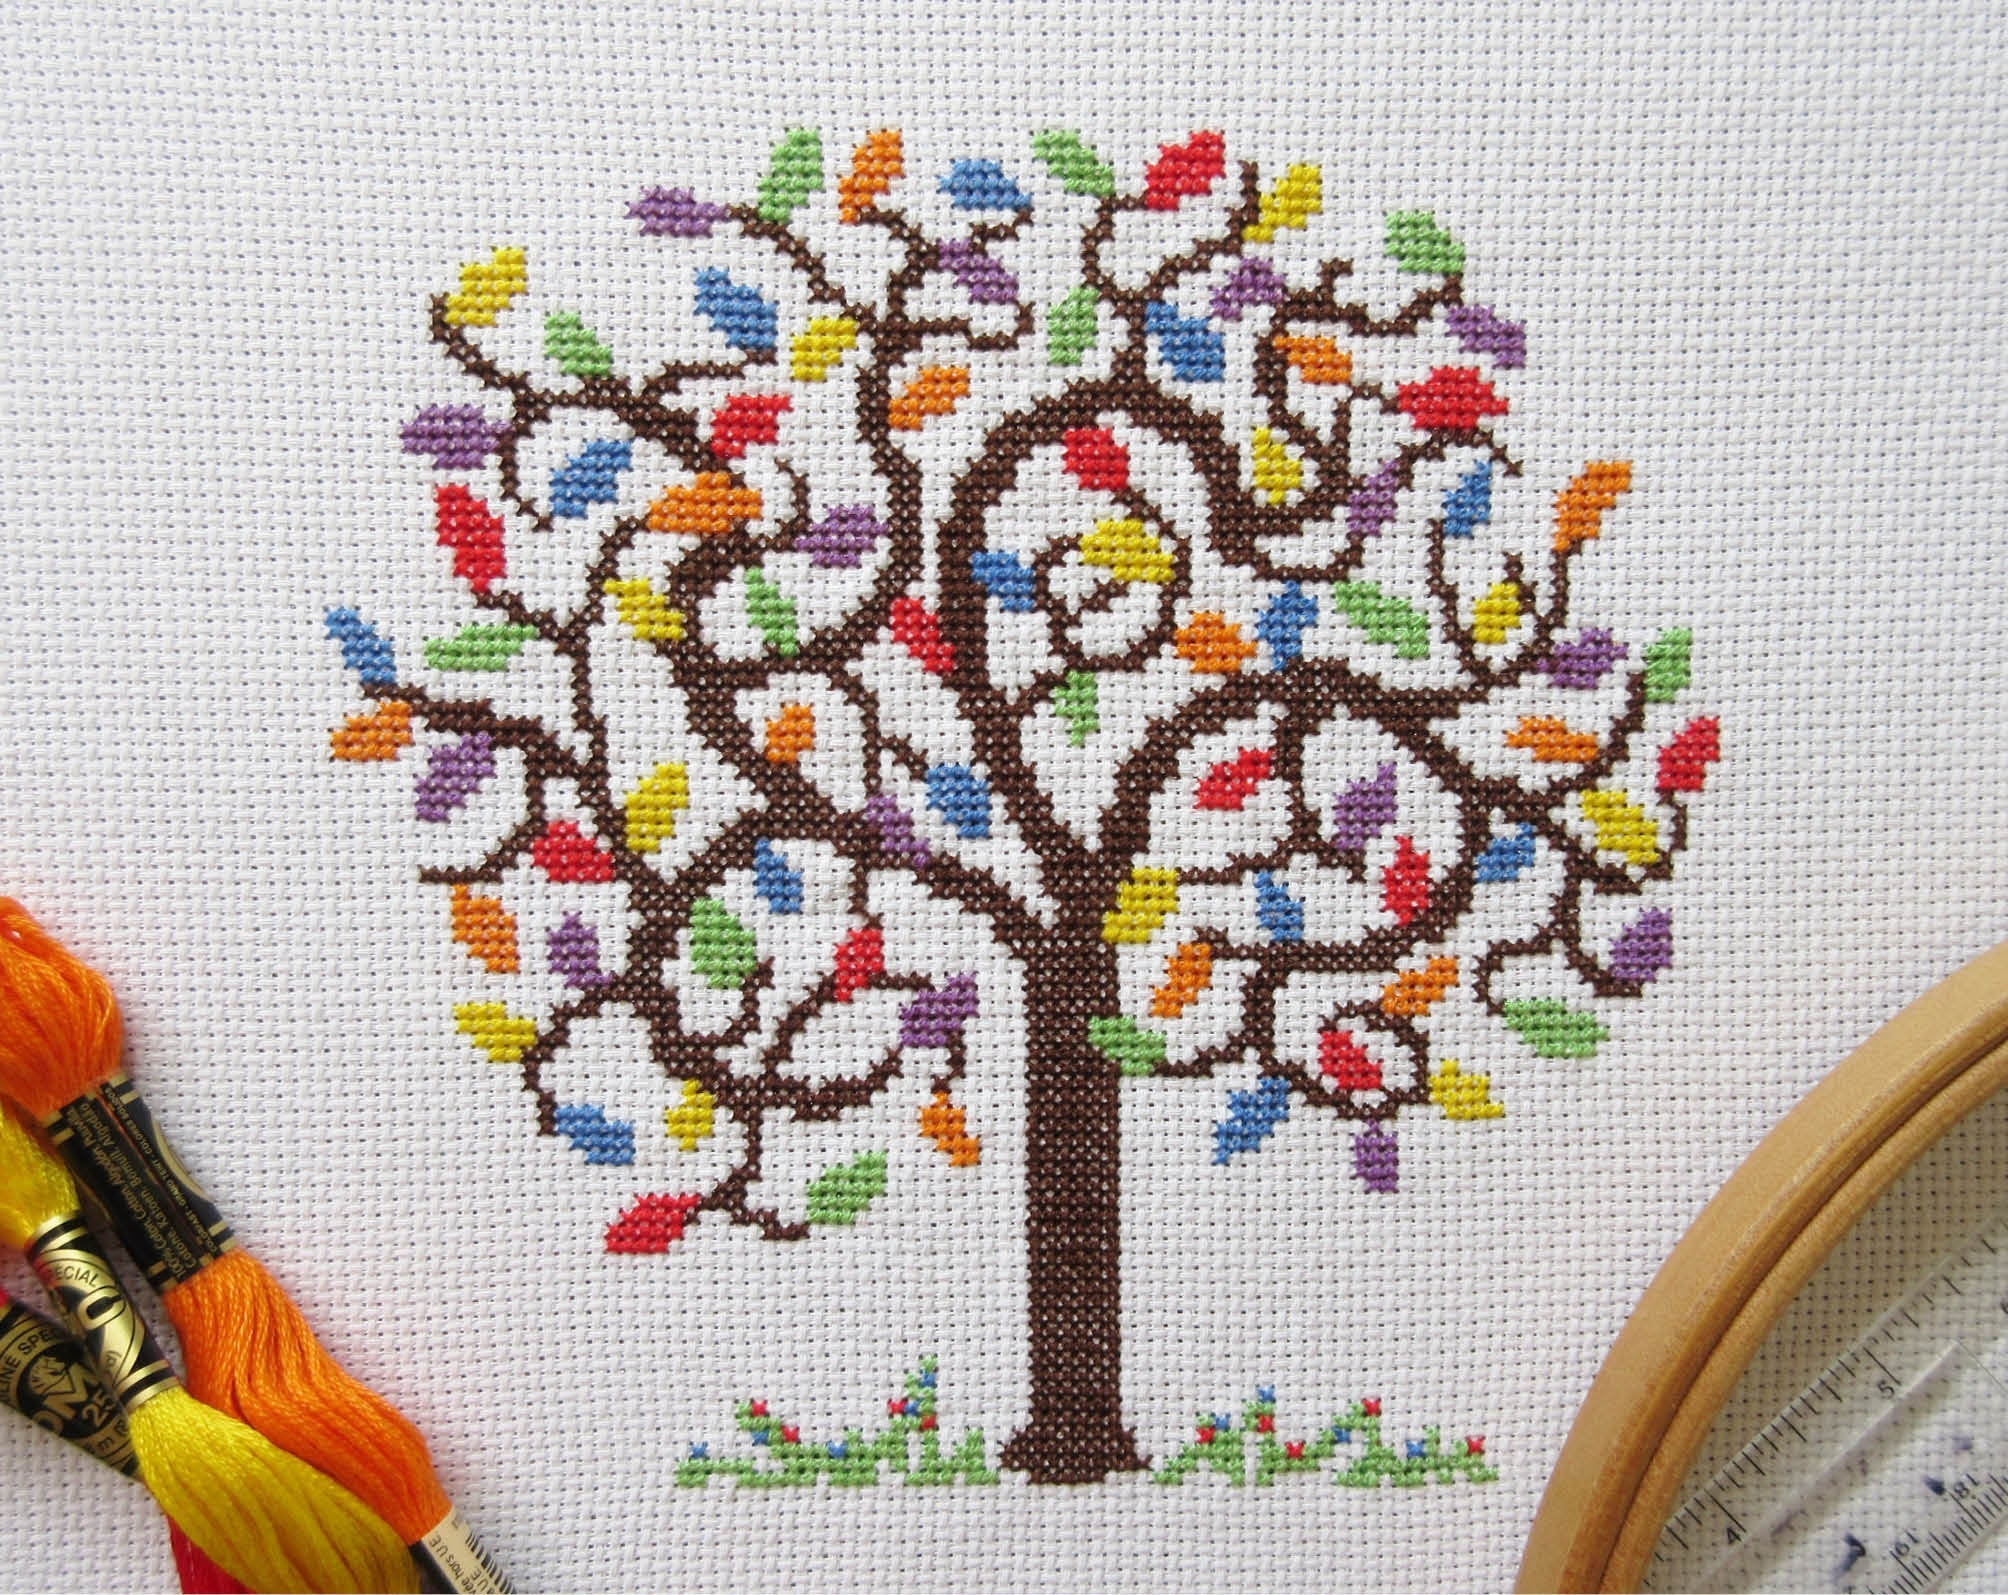 Rainbow Tree cross stitch pattern - stitched piece with props